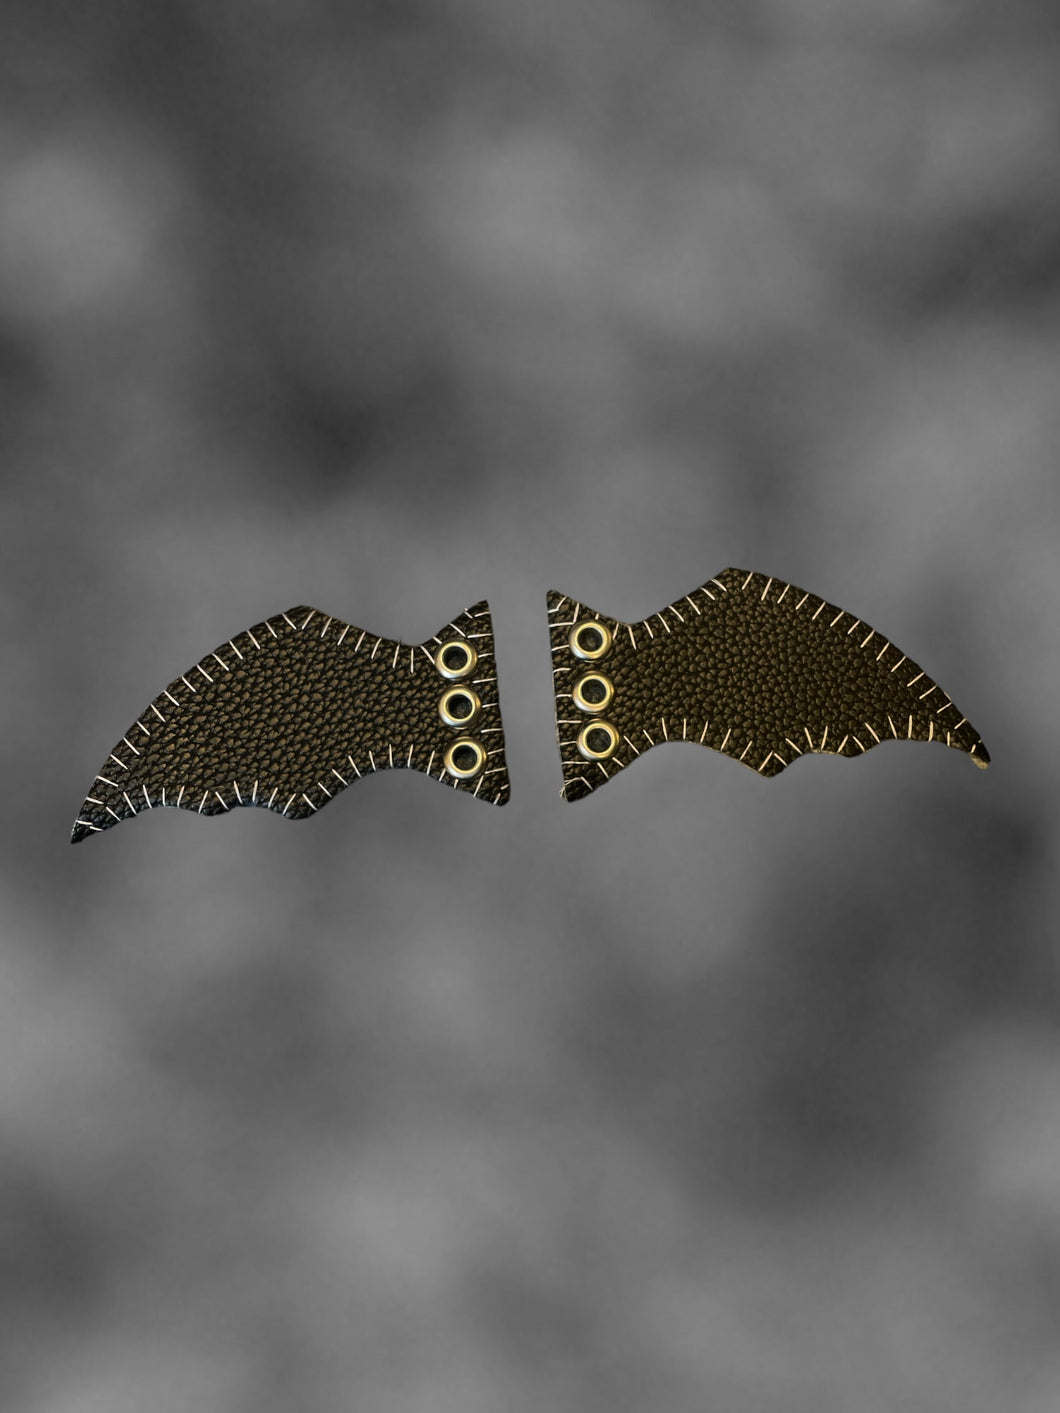 Black pleather bat wing shoe accessory w/ metal eyelets, & white stitching